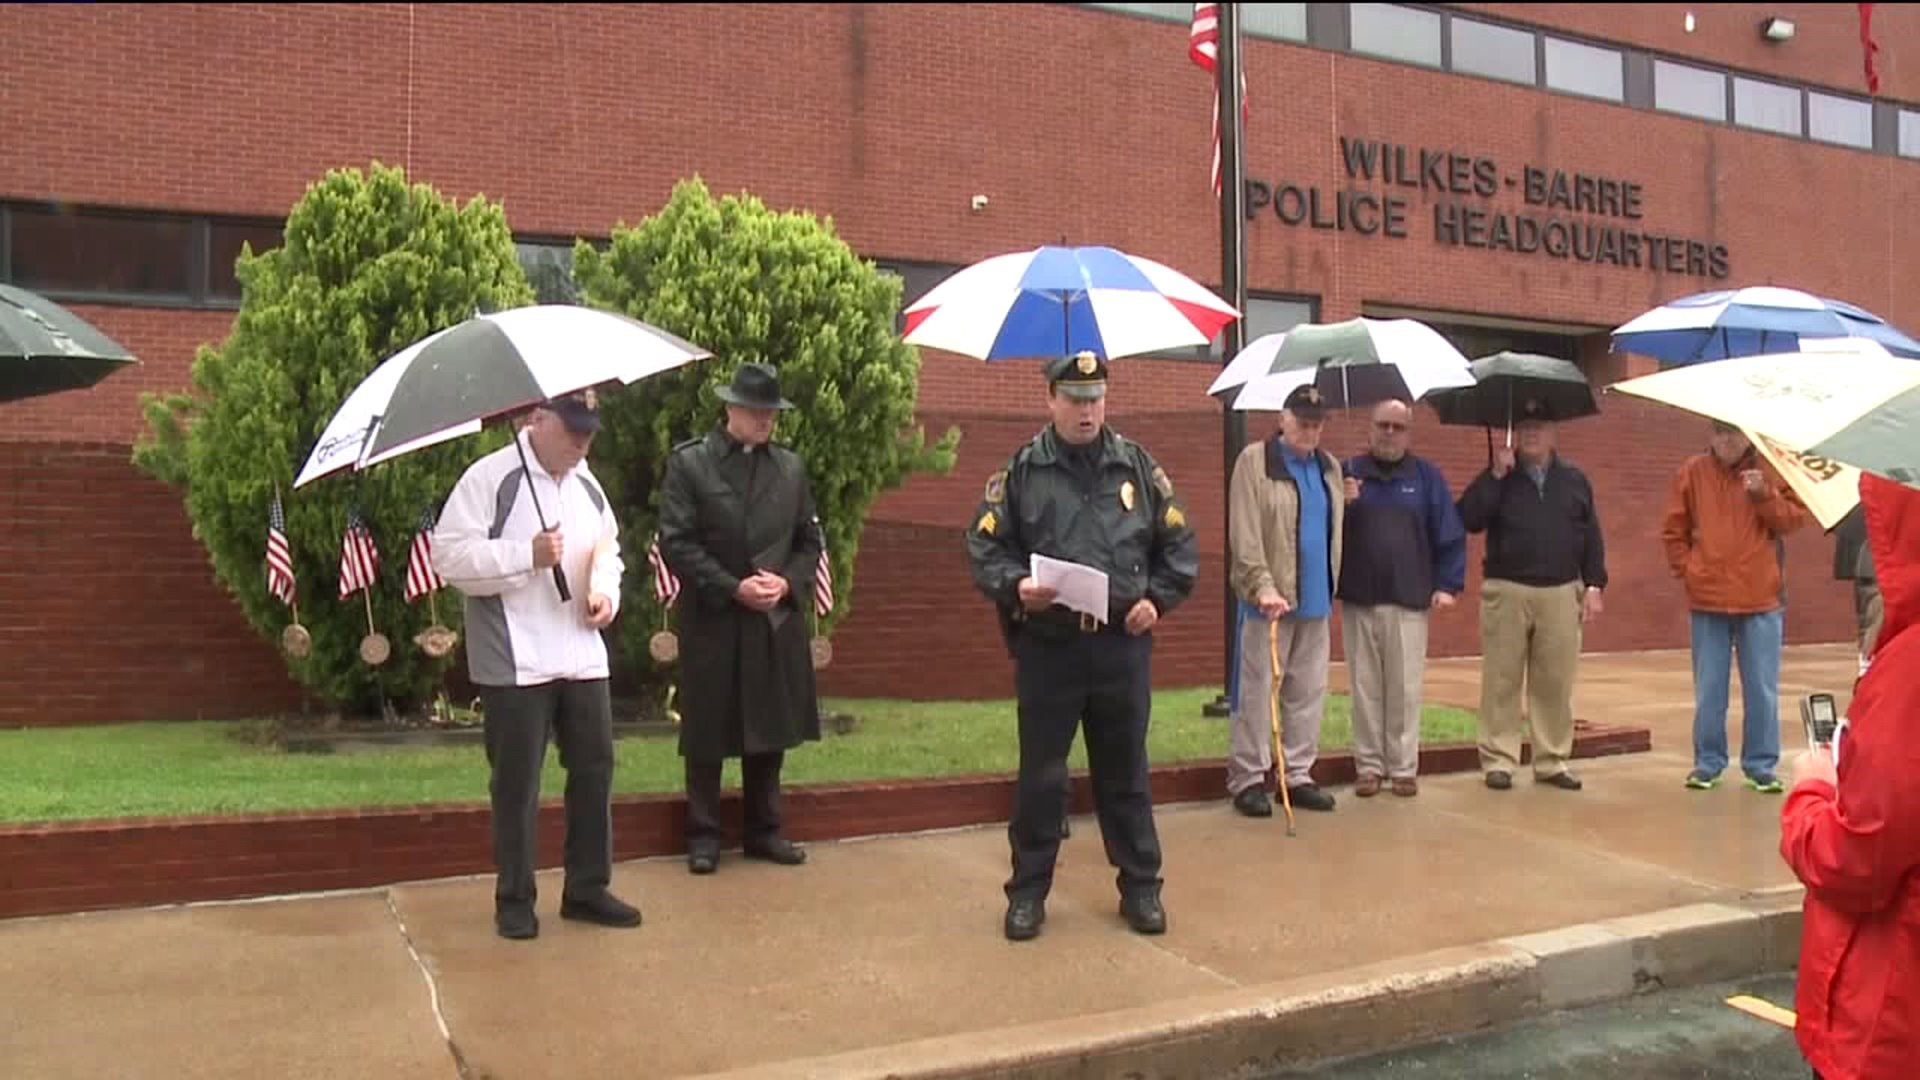 Memorial Held for Fallen Officers in Wilkes-Barre